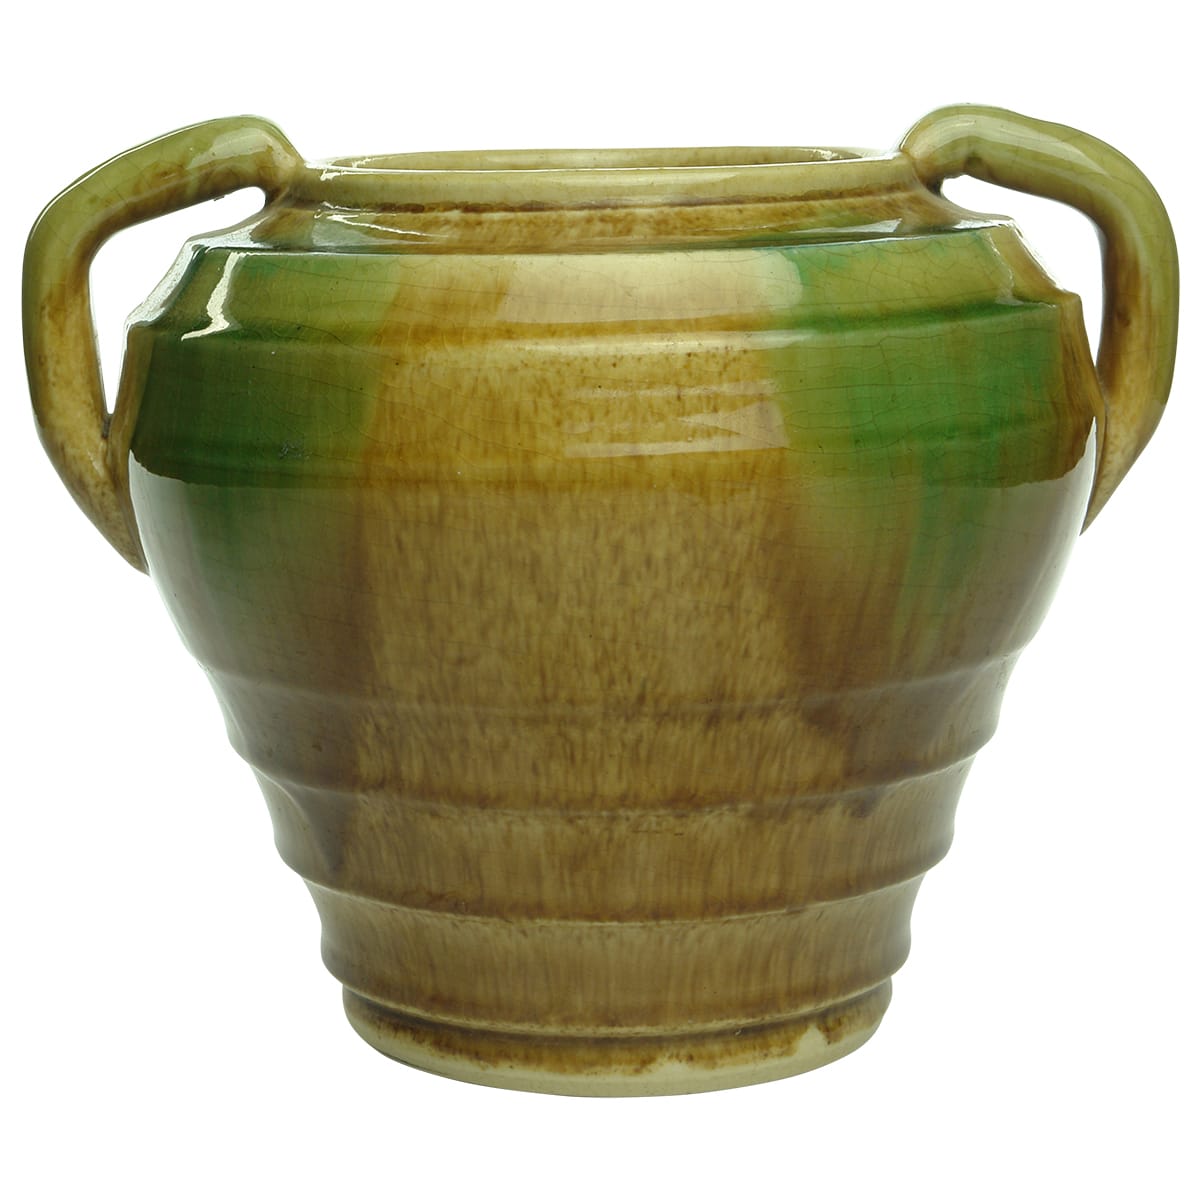 Bendigo Pottery. Brown & Green handled vase.